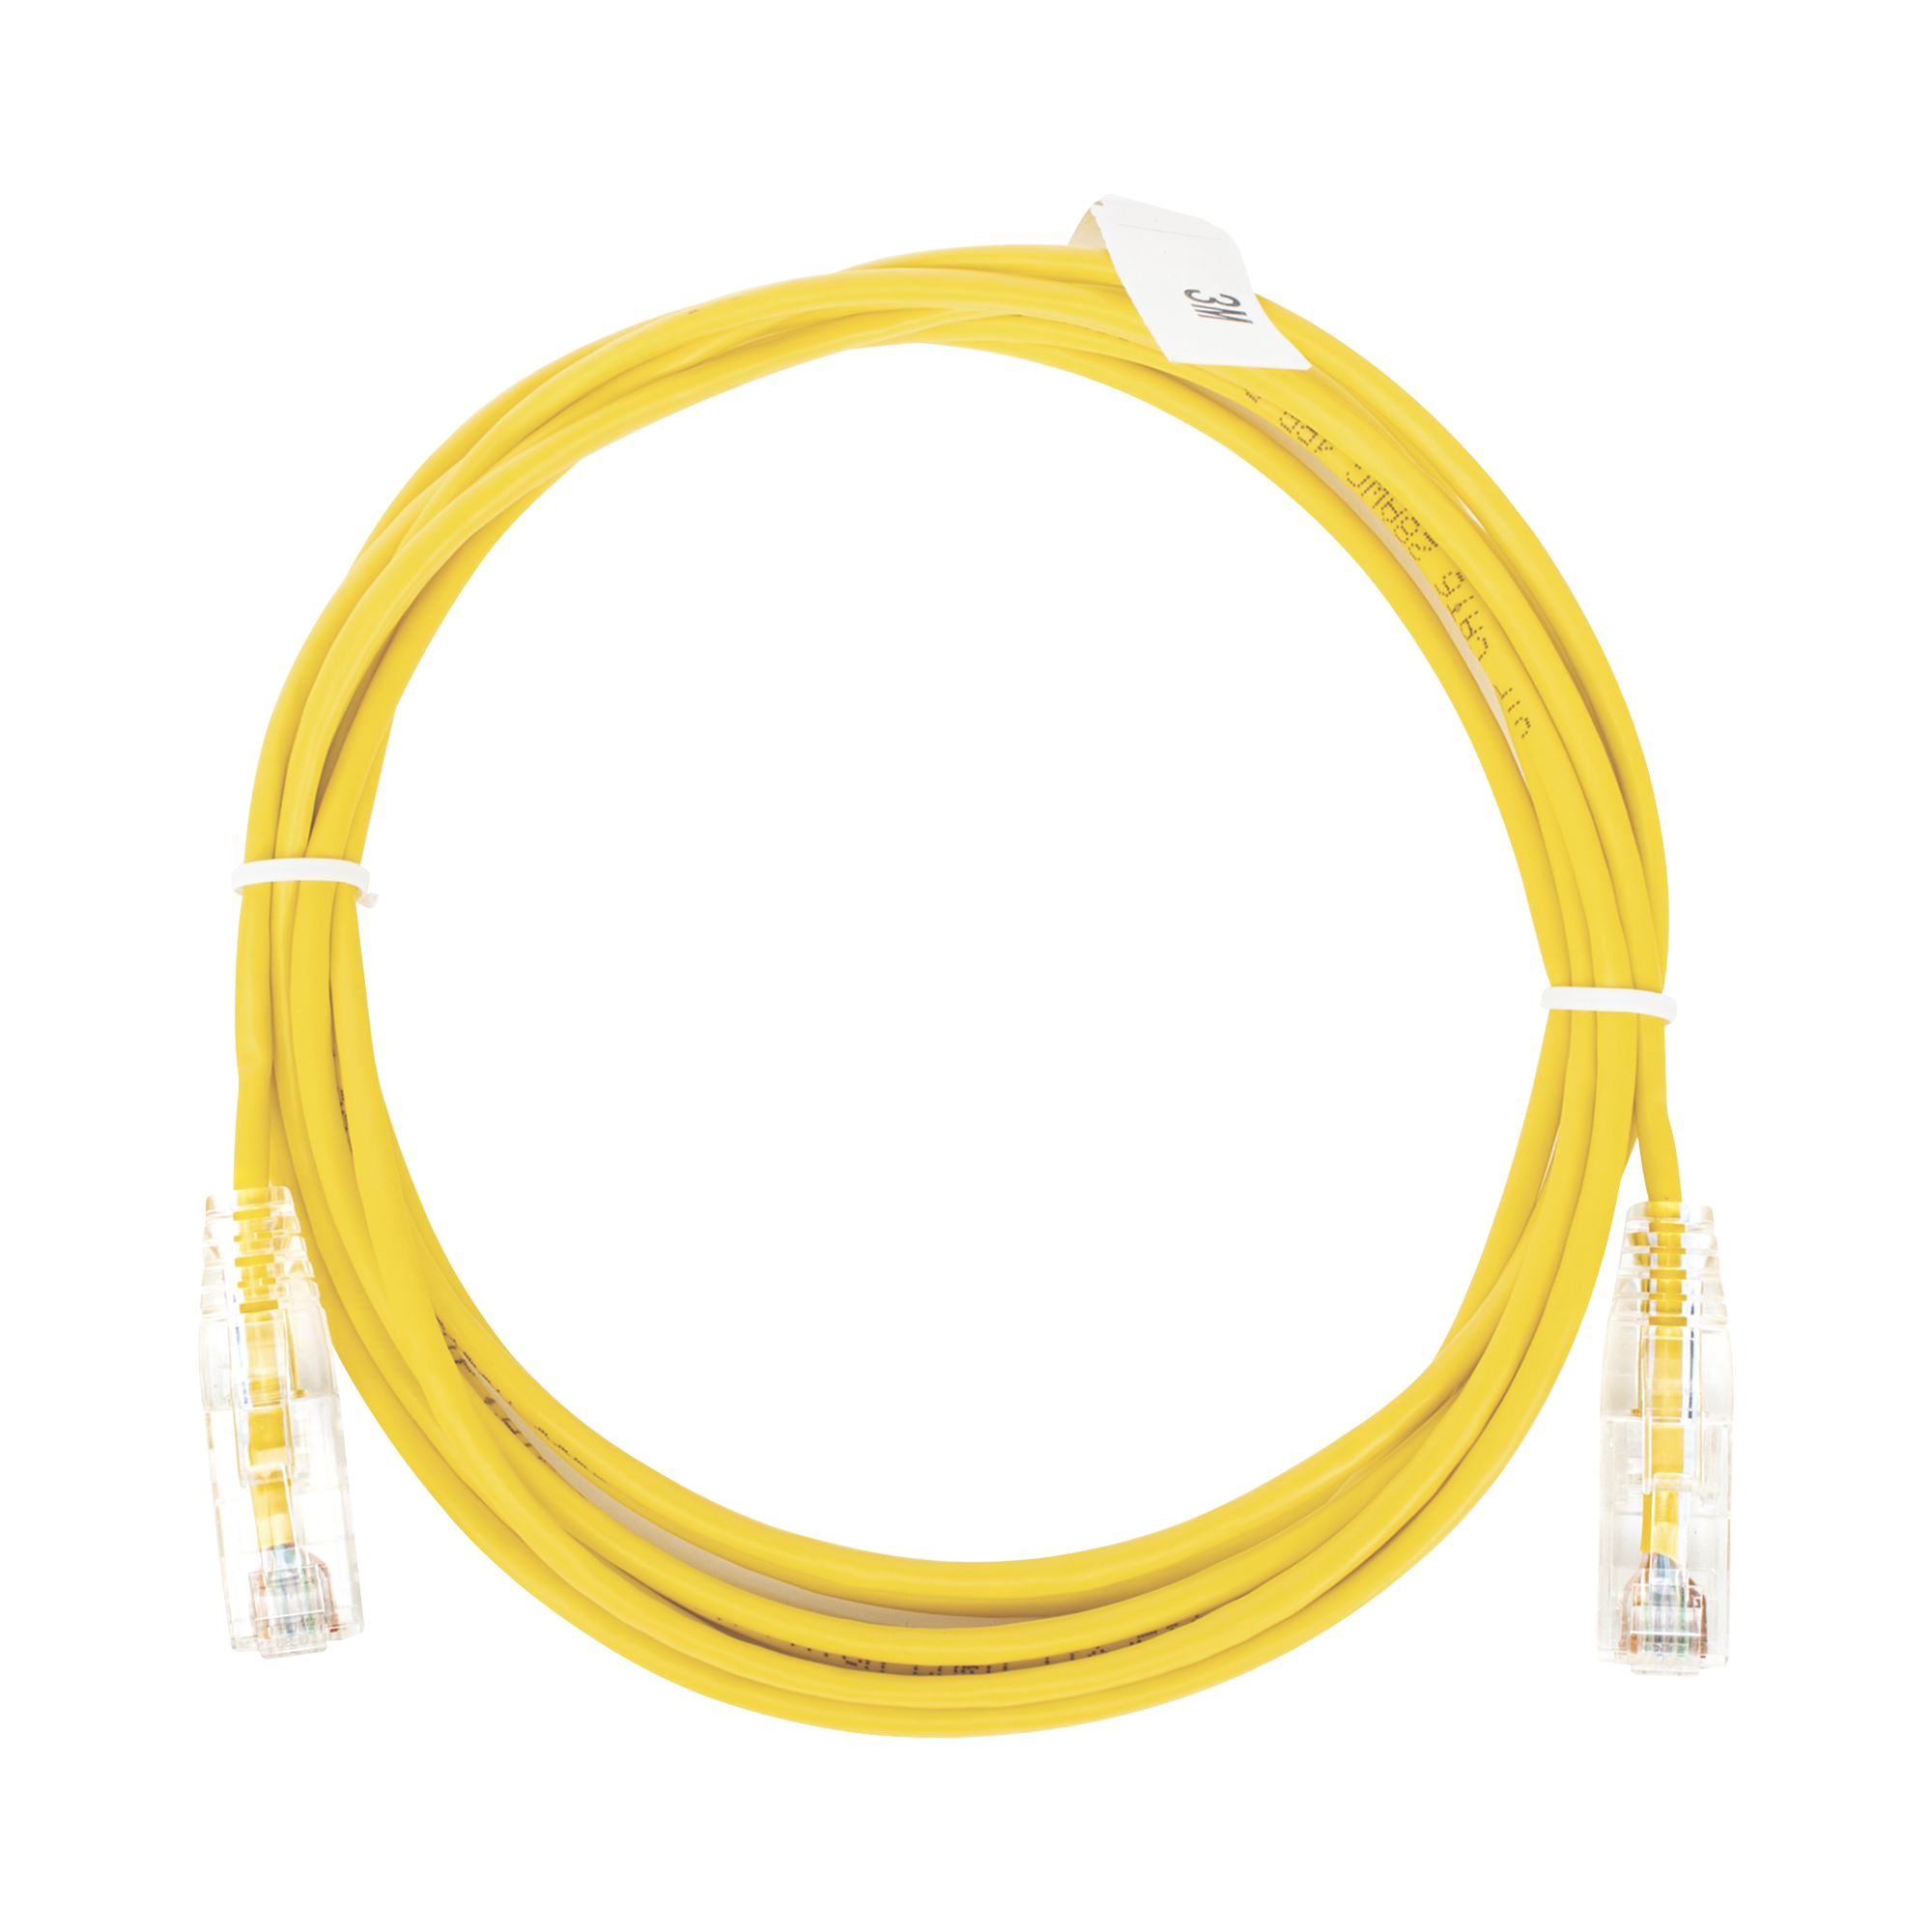 Cable de Parcheo Slim UTP Cat6 - 3 m Amarillo Diámetro Reducido (28 AWG)